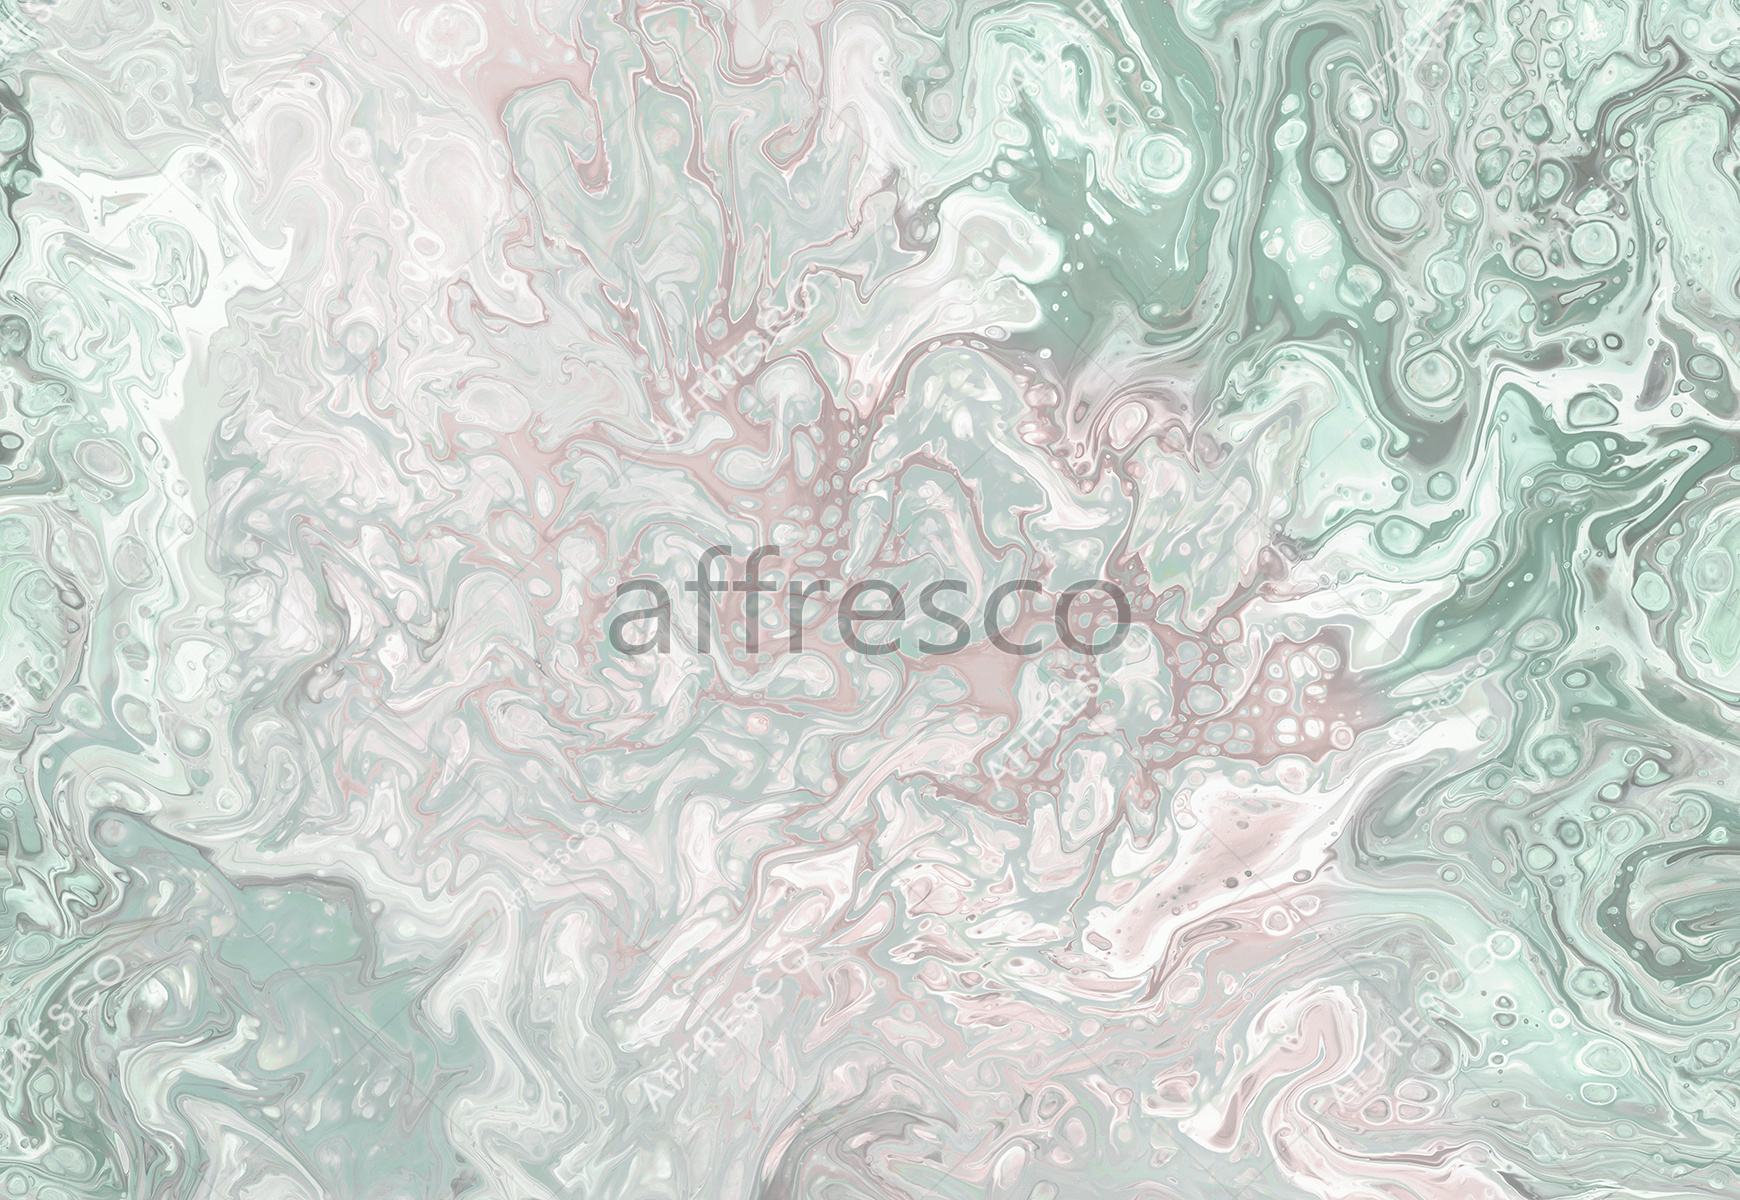 ID138702 | Textures |  | Affresco Factory